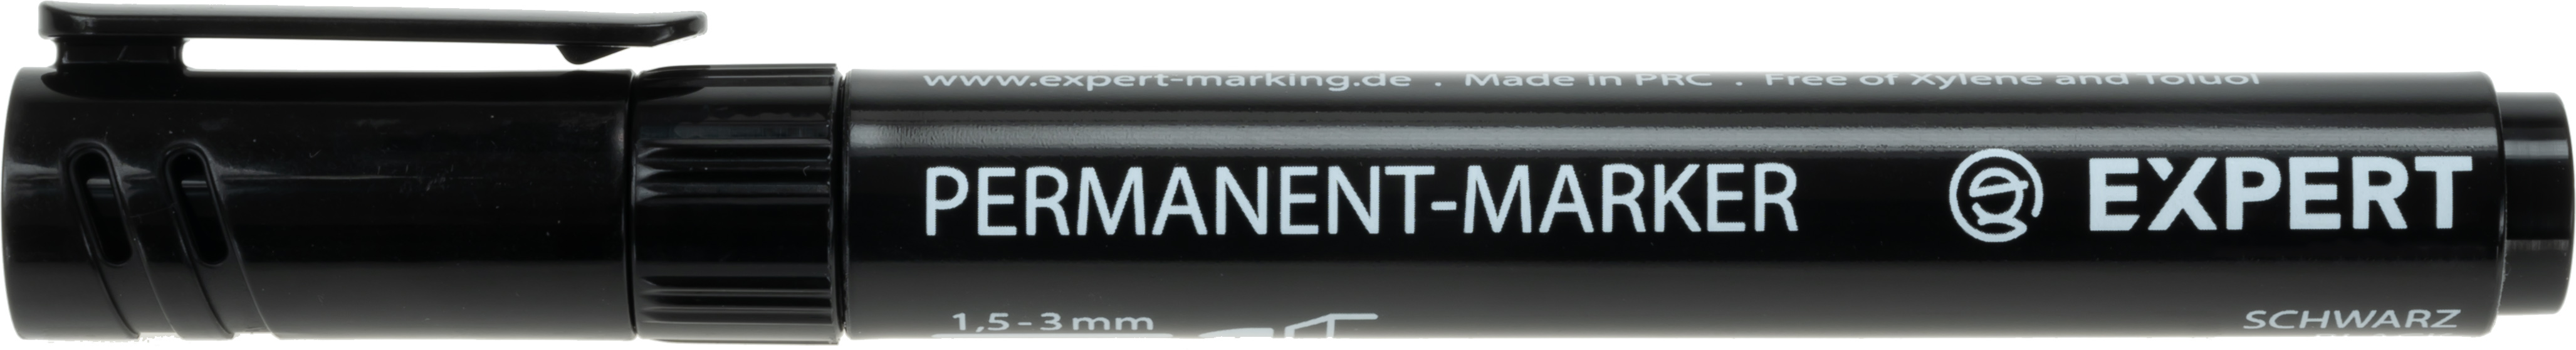 EXPERT Permanent marker round black